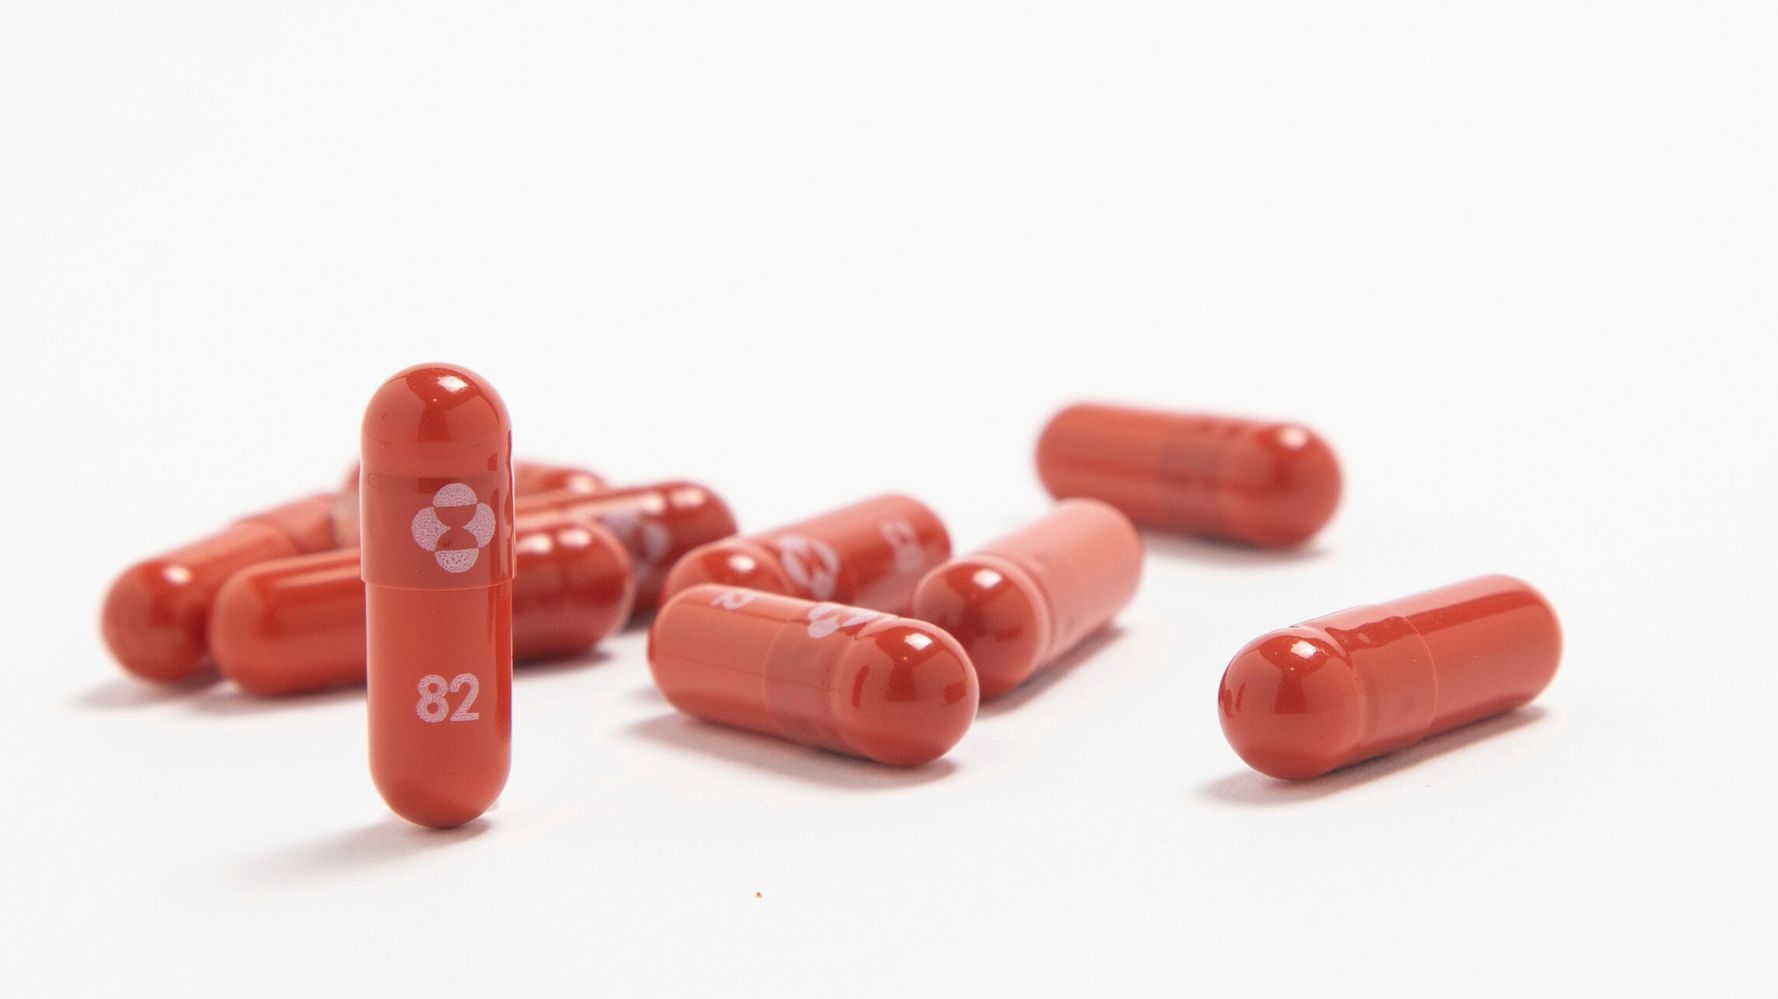 Merck solicita a la FDA que autorice la prometedora píldora anti-COVID